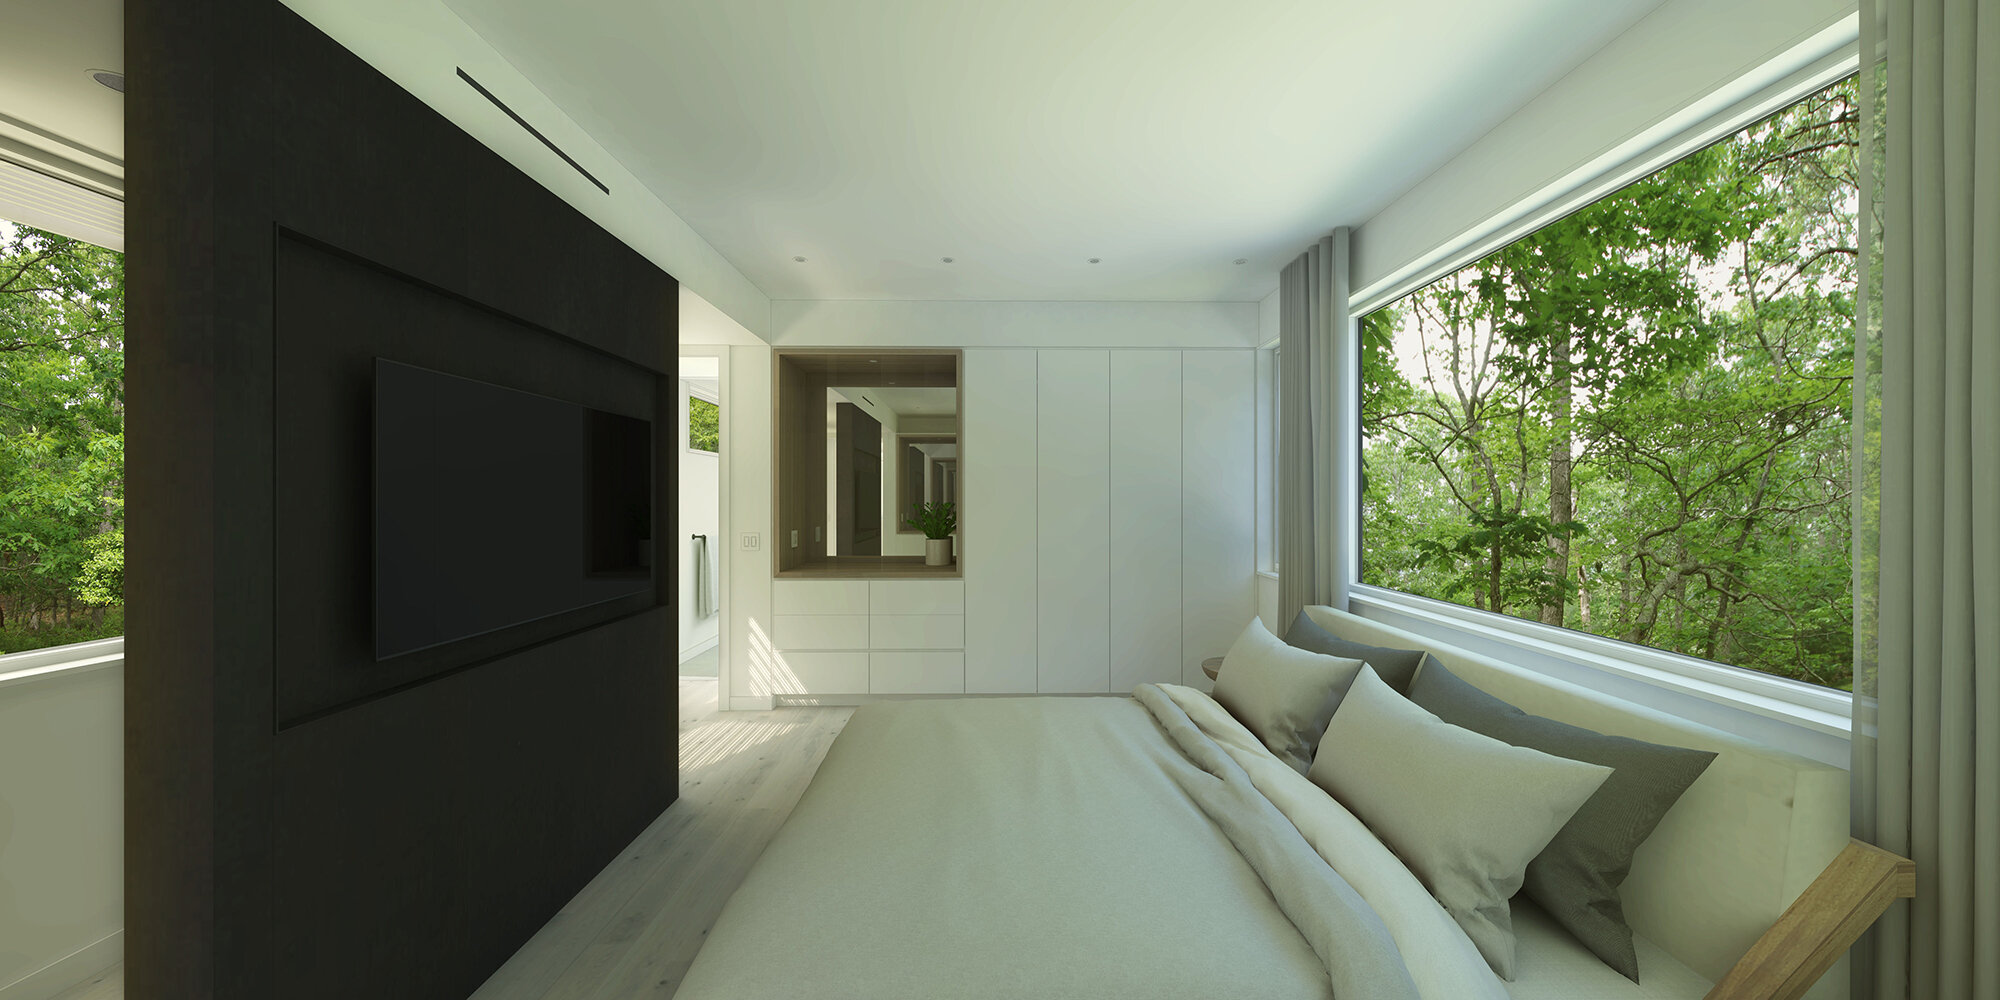 res4-resolution-4-architecture-modern-modular-great-oak-residence-prefab-home-08-master-bedroom.jpg